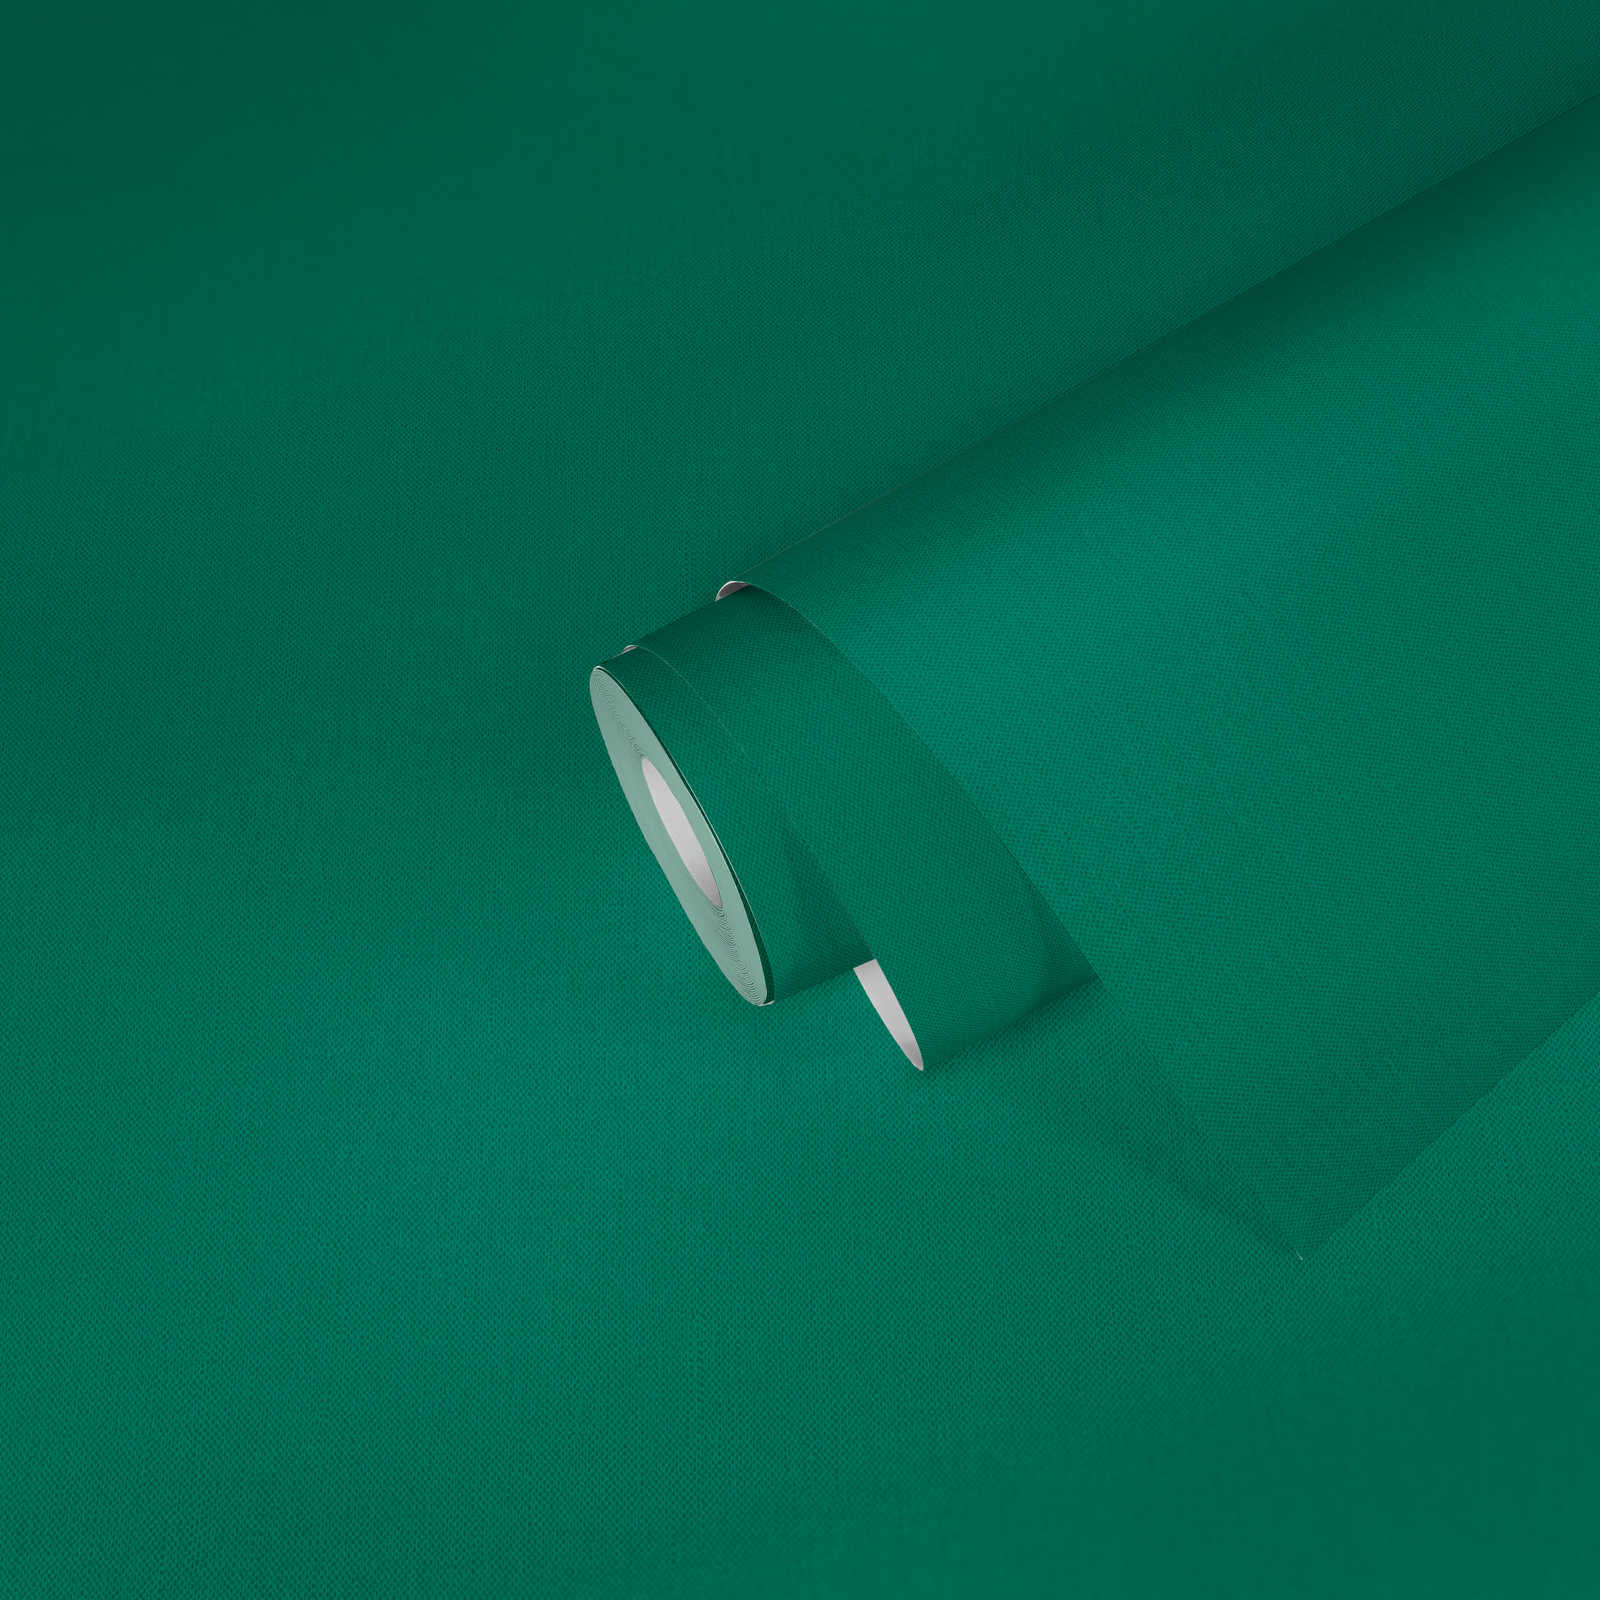             Papier peint vert avec structure textile vert signal uni mat
        